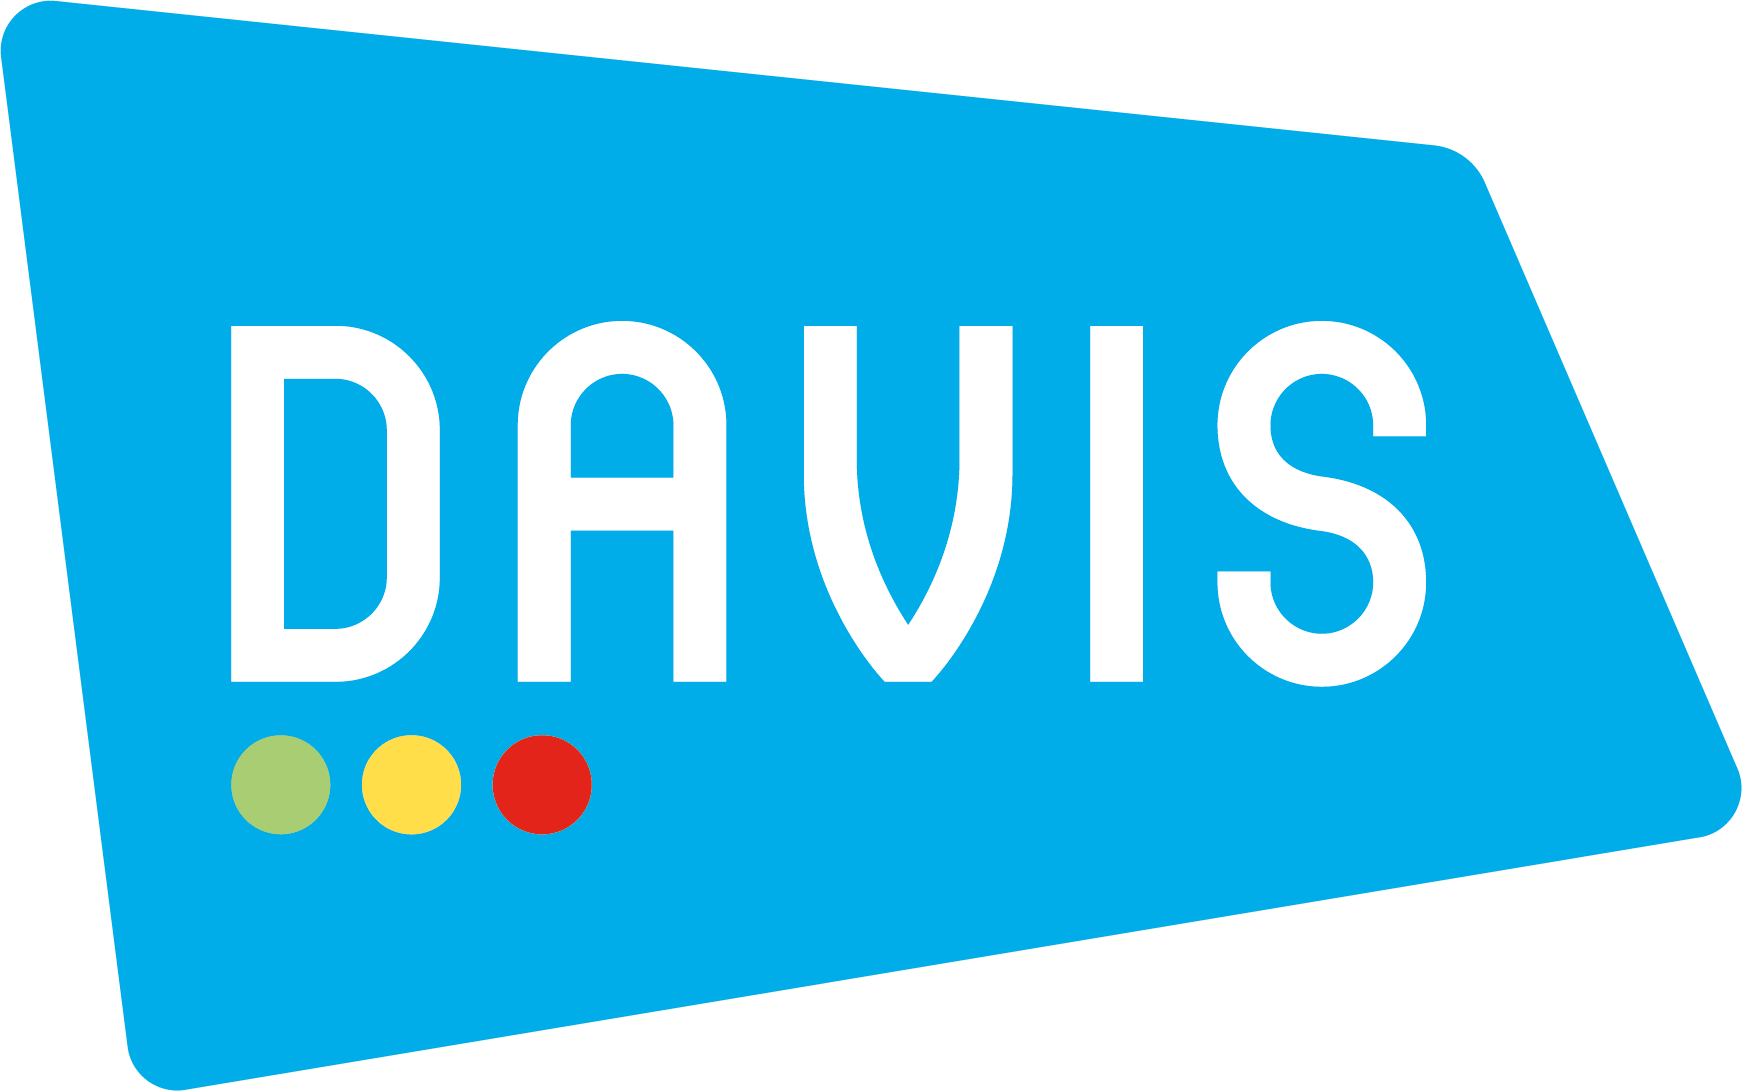 DAVIS Master Logo - Blue-1